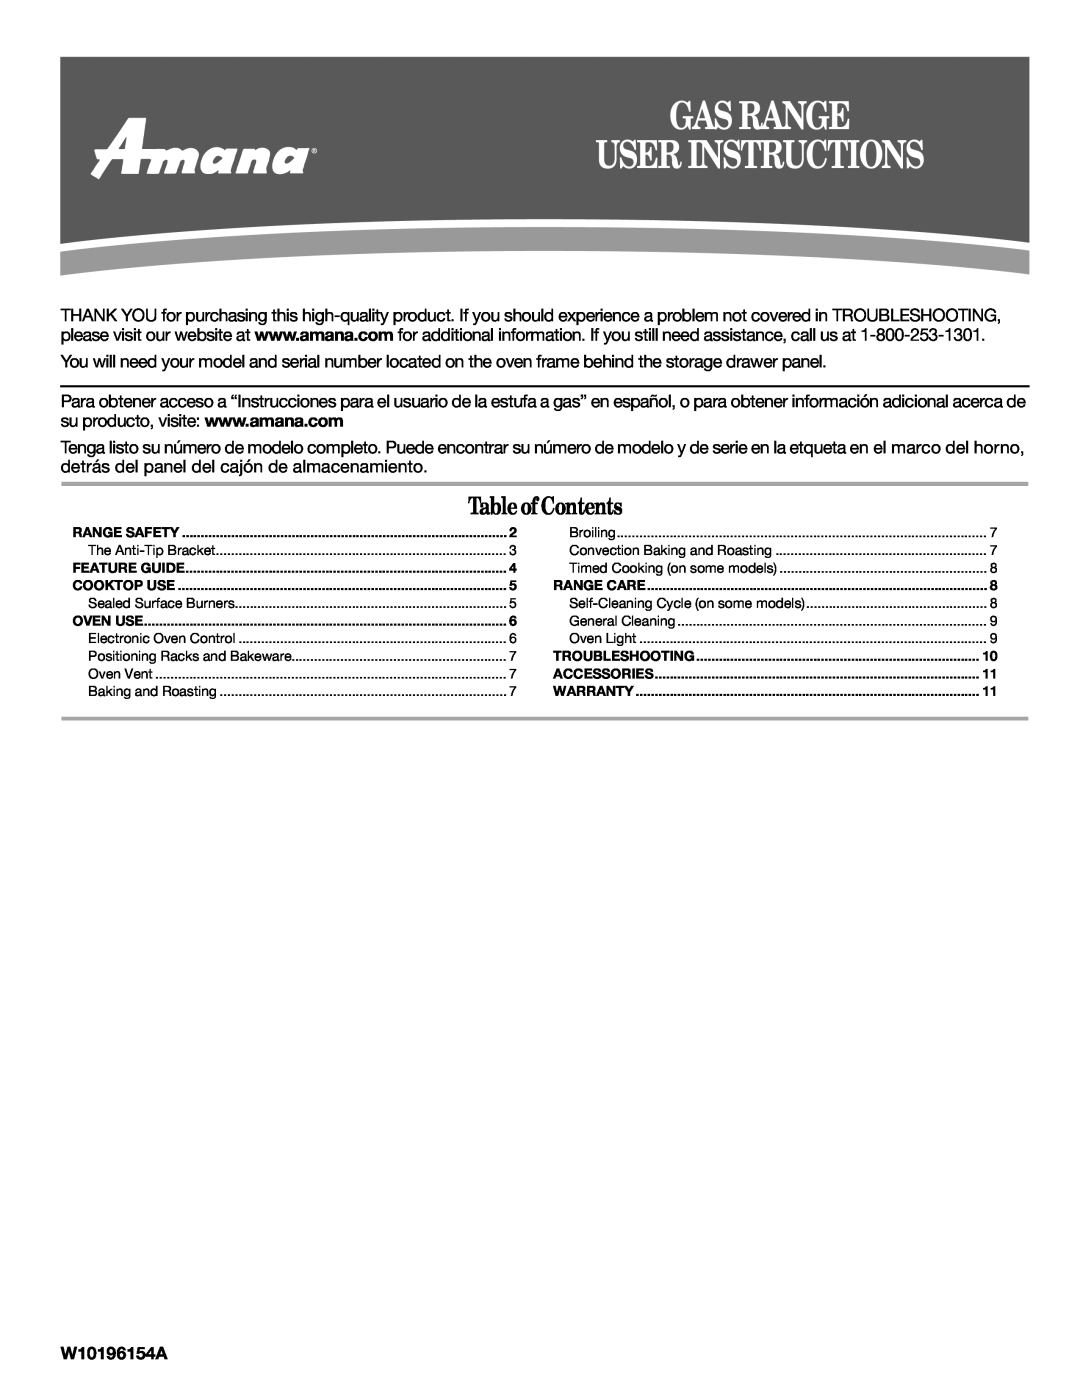 Amana AGR6011VDW warranty Gas Range User Instructions, Tableof Contents, W10196154A 